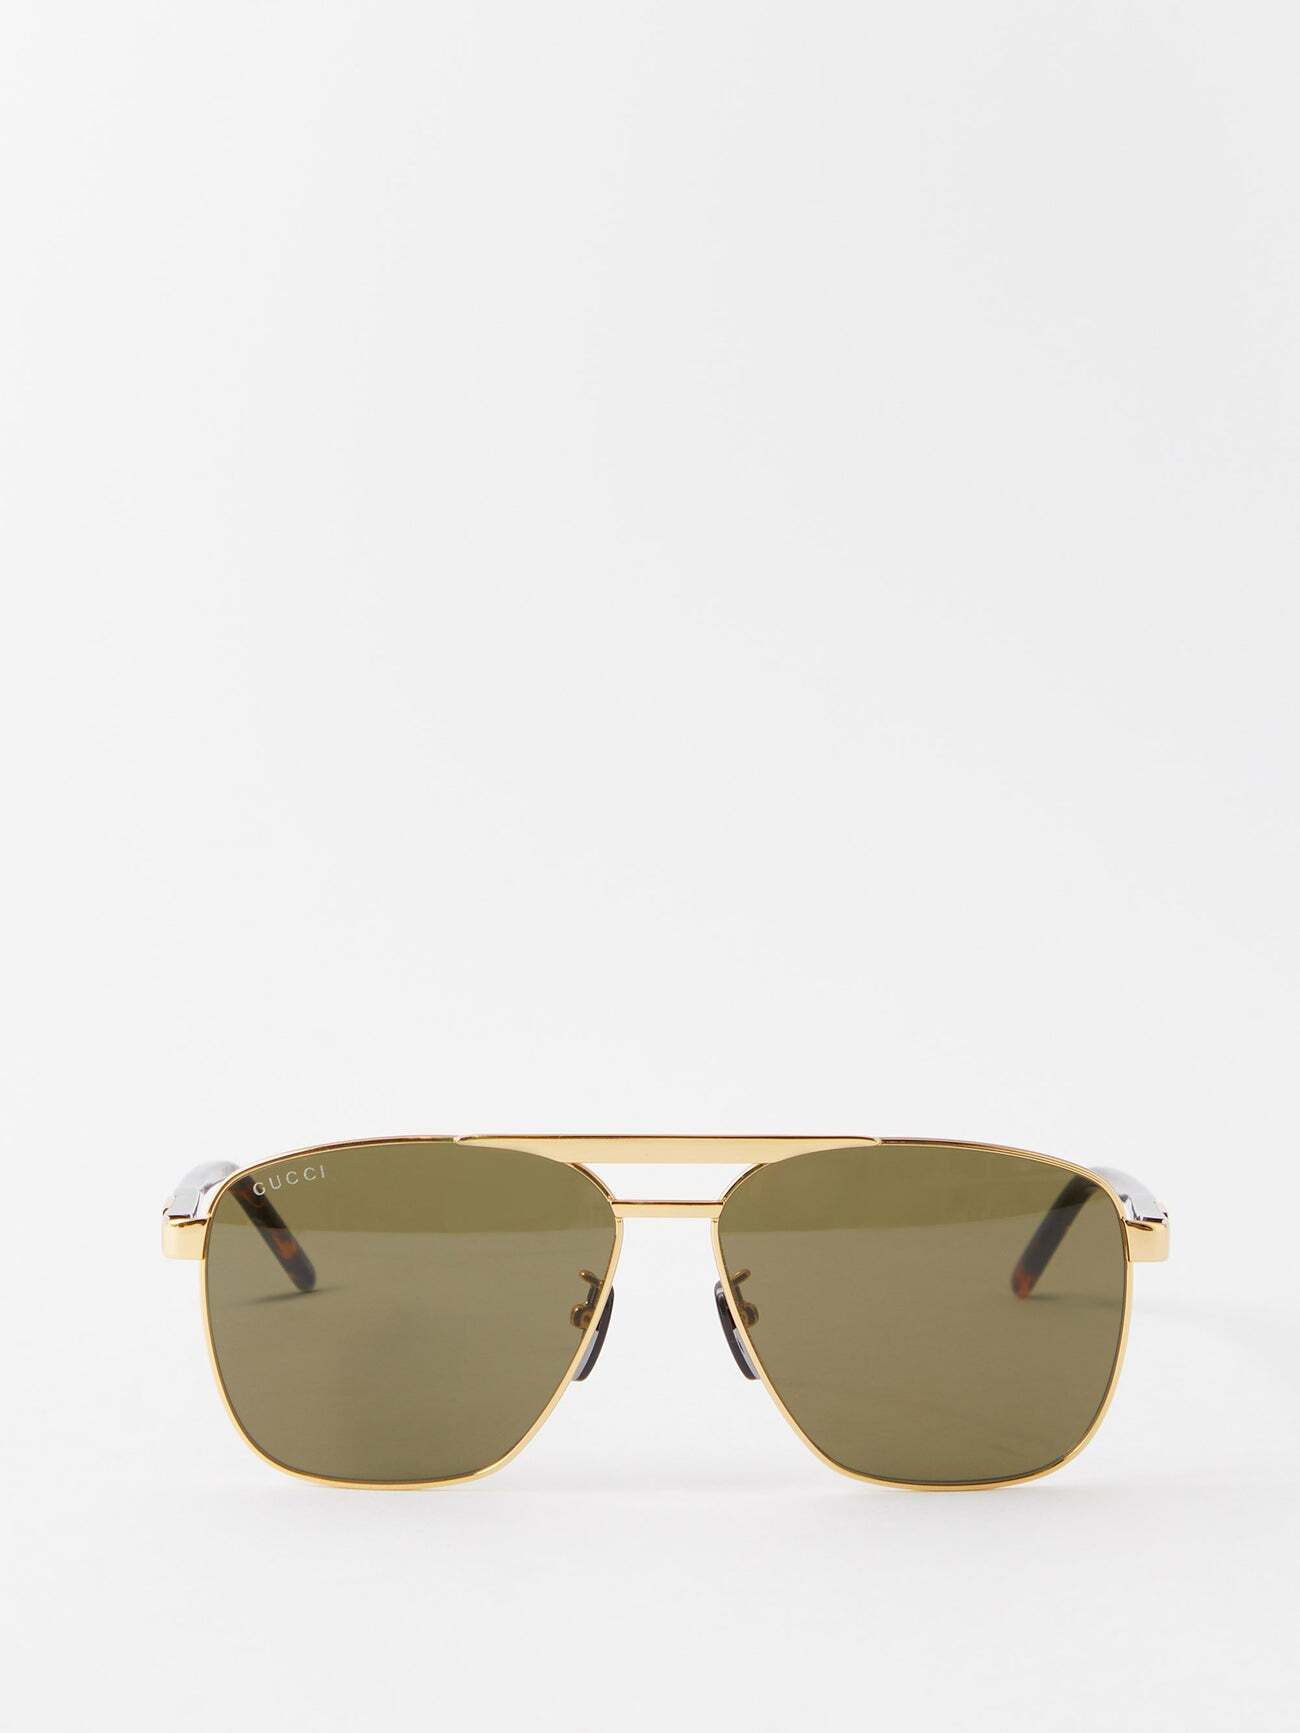 Gucci - Aviator Metal Sunglasses - Womens - Green Gold